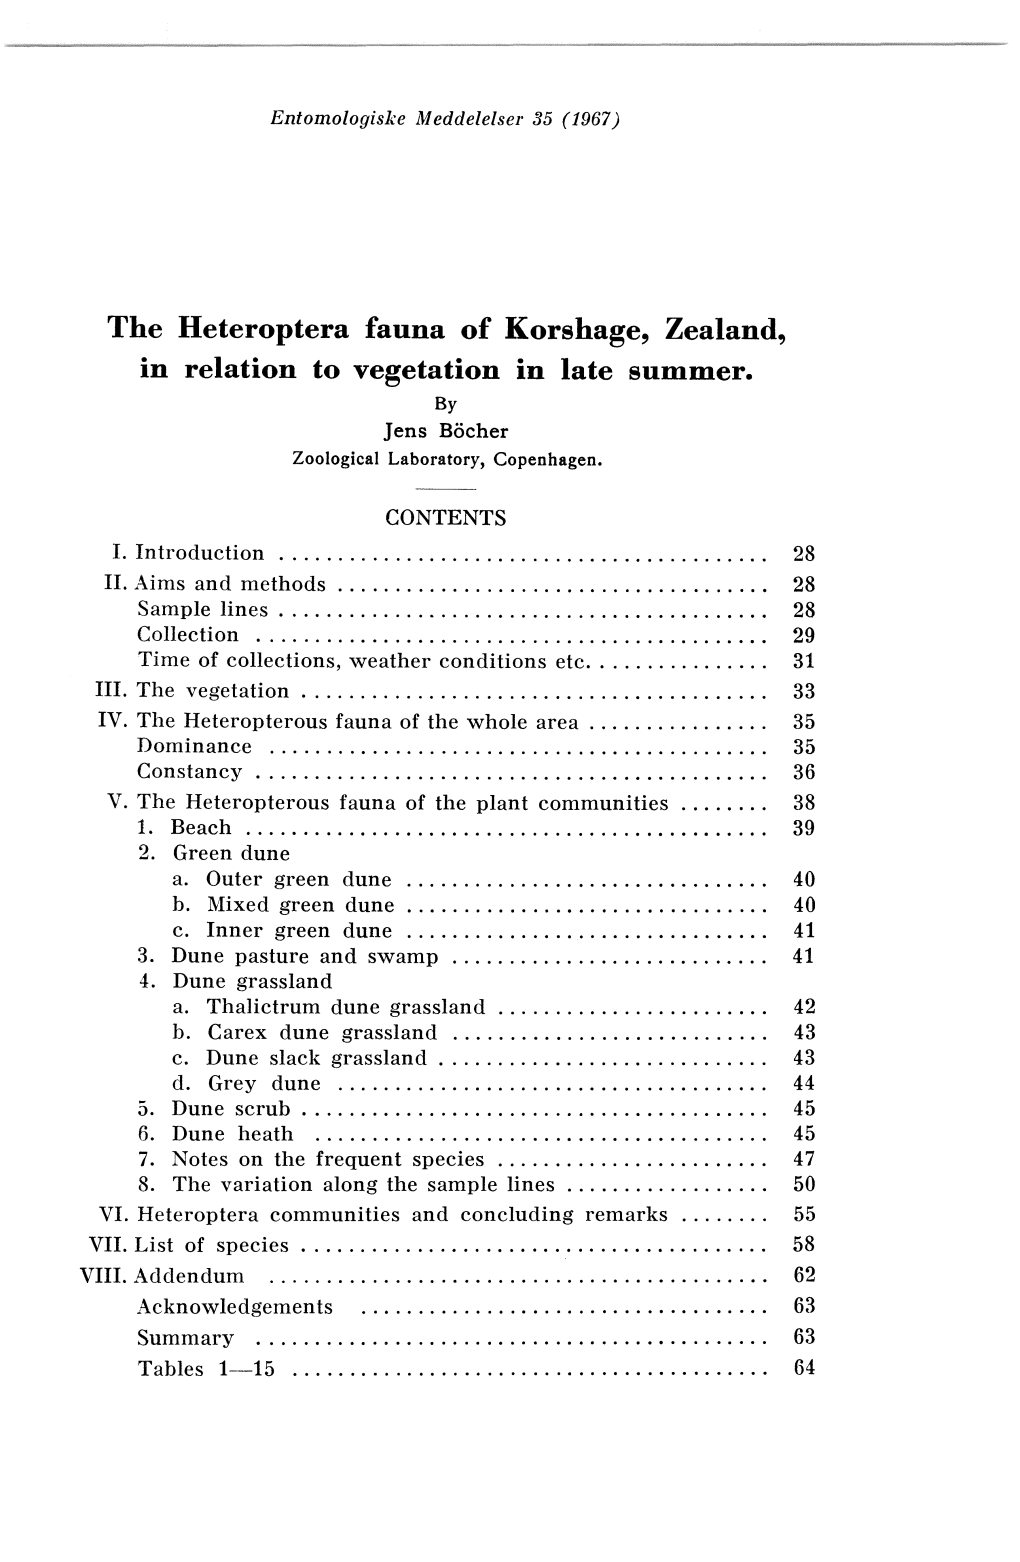 The Heteroptera Fauna of Korshage, Zealand, in Relation to Vegetation in Late Summer